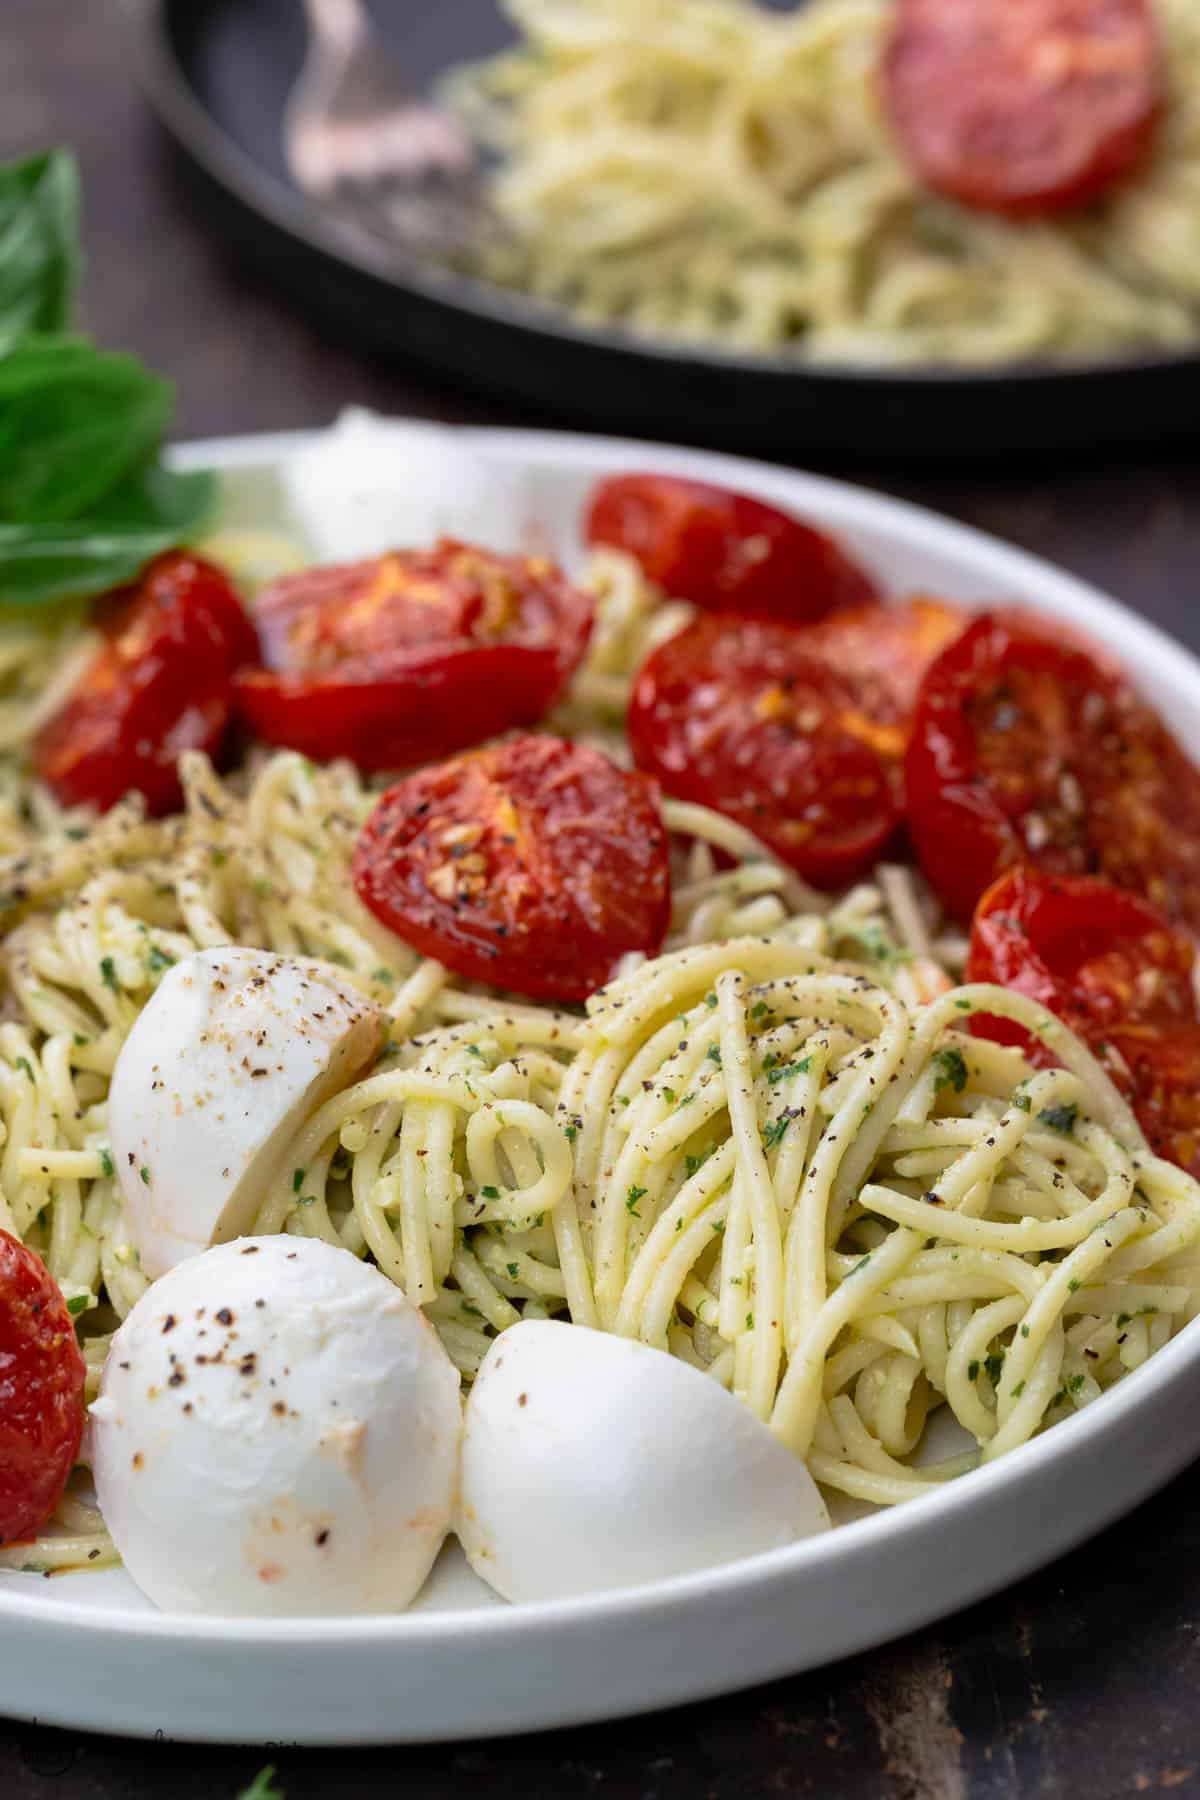 https://www.themediterraneandish.com/wp-content/uploads/2020/08/pesto-pasta-recipe-7.jpg